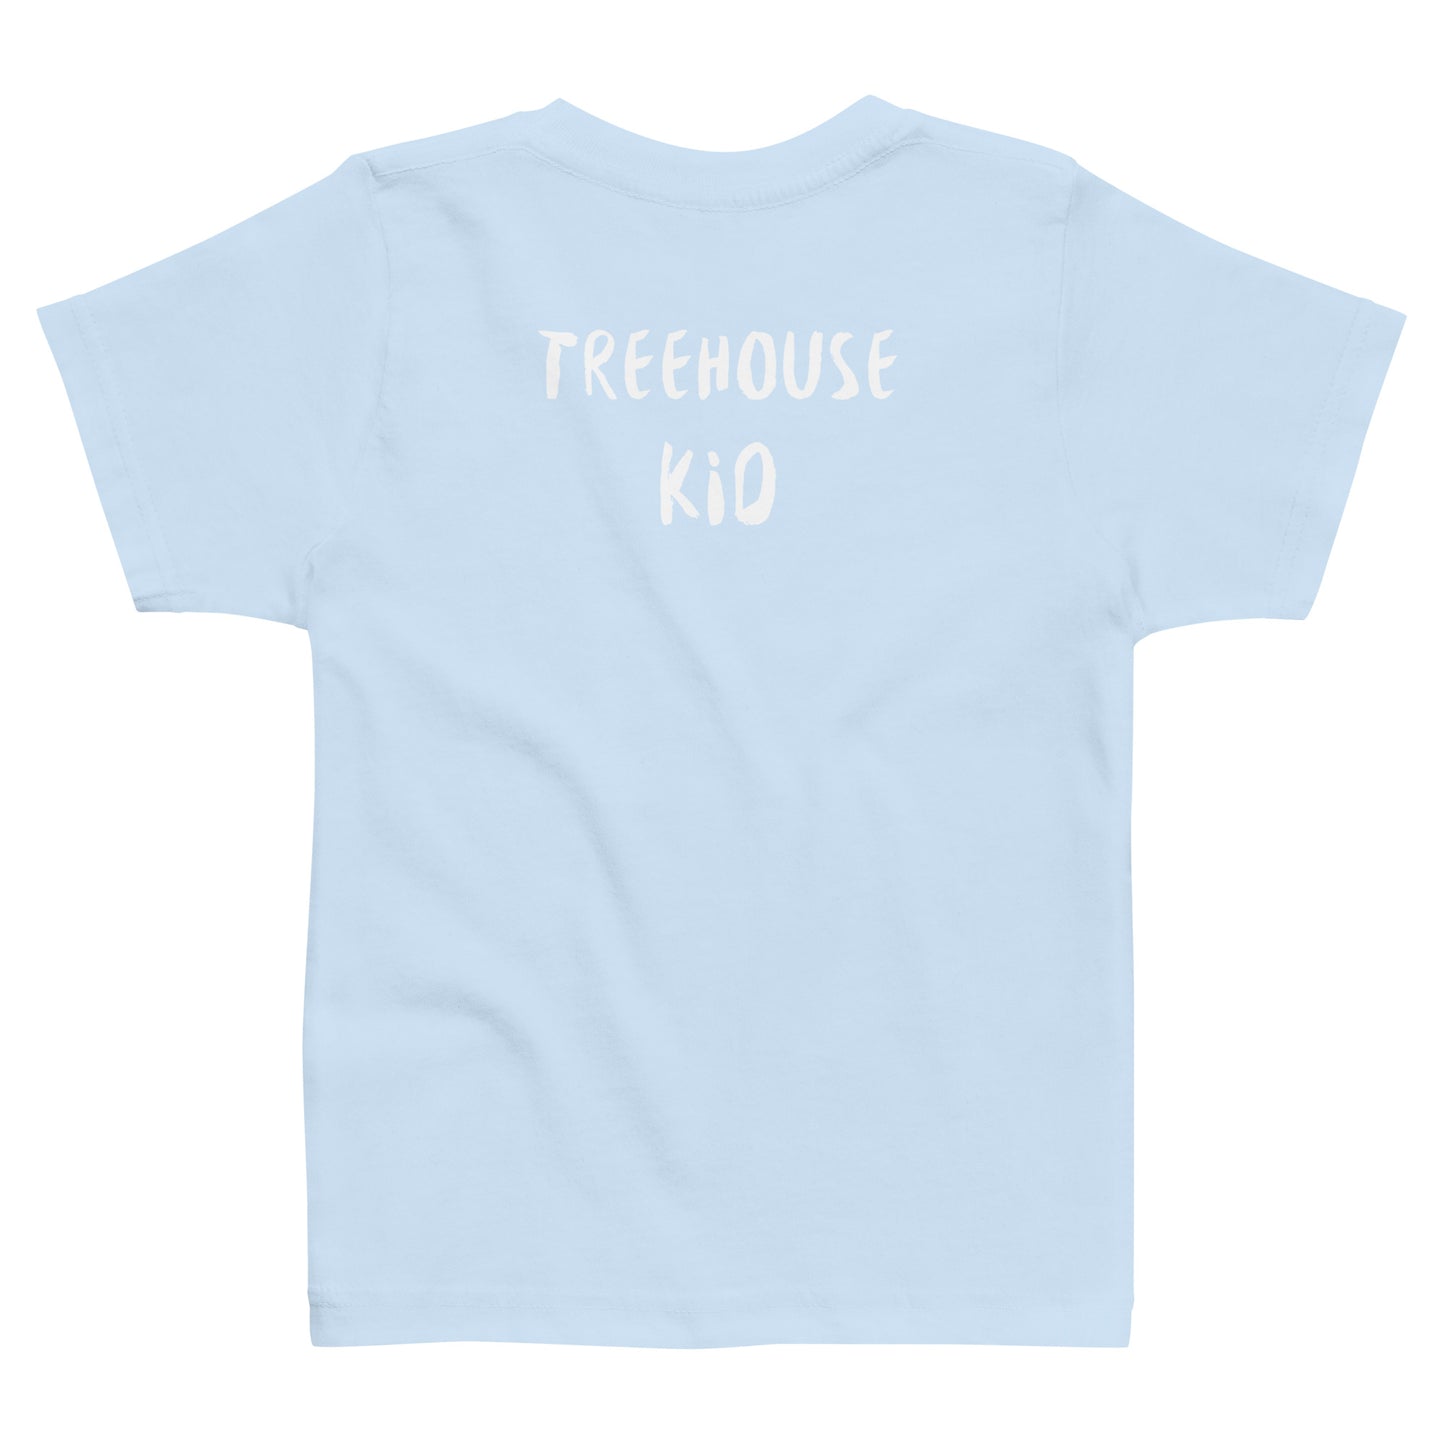 Treehouse Kid Toddler jersey t-shirt